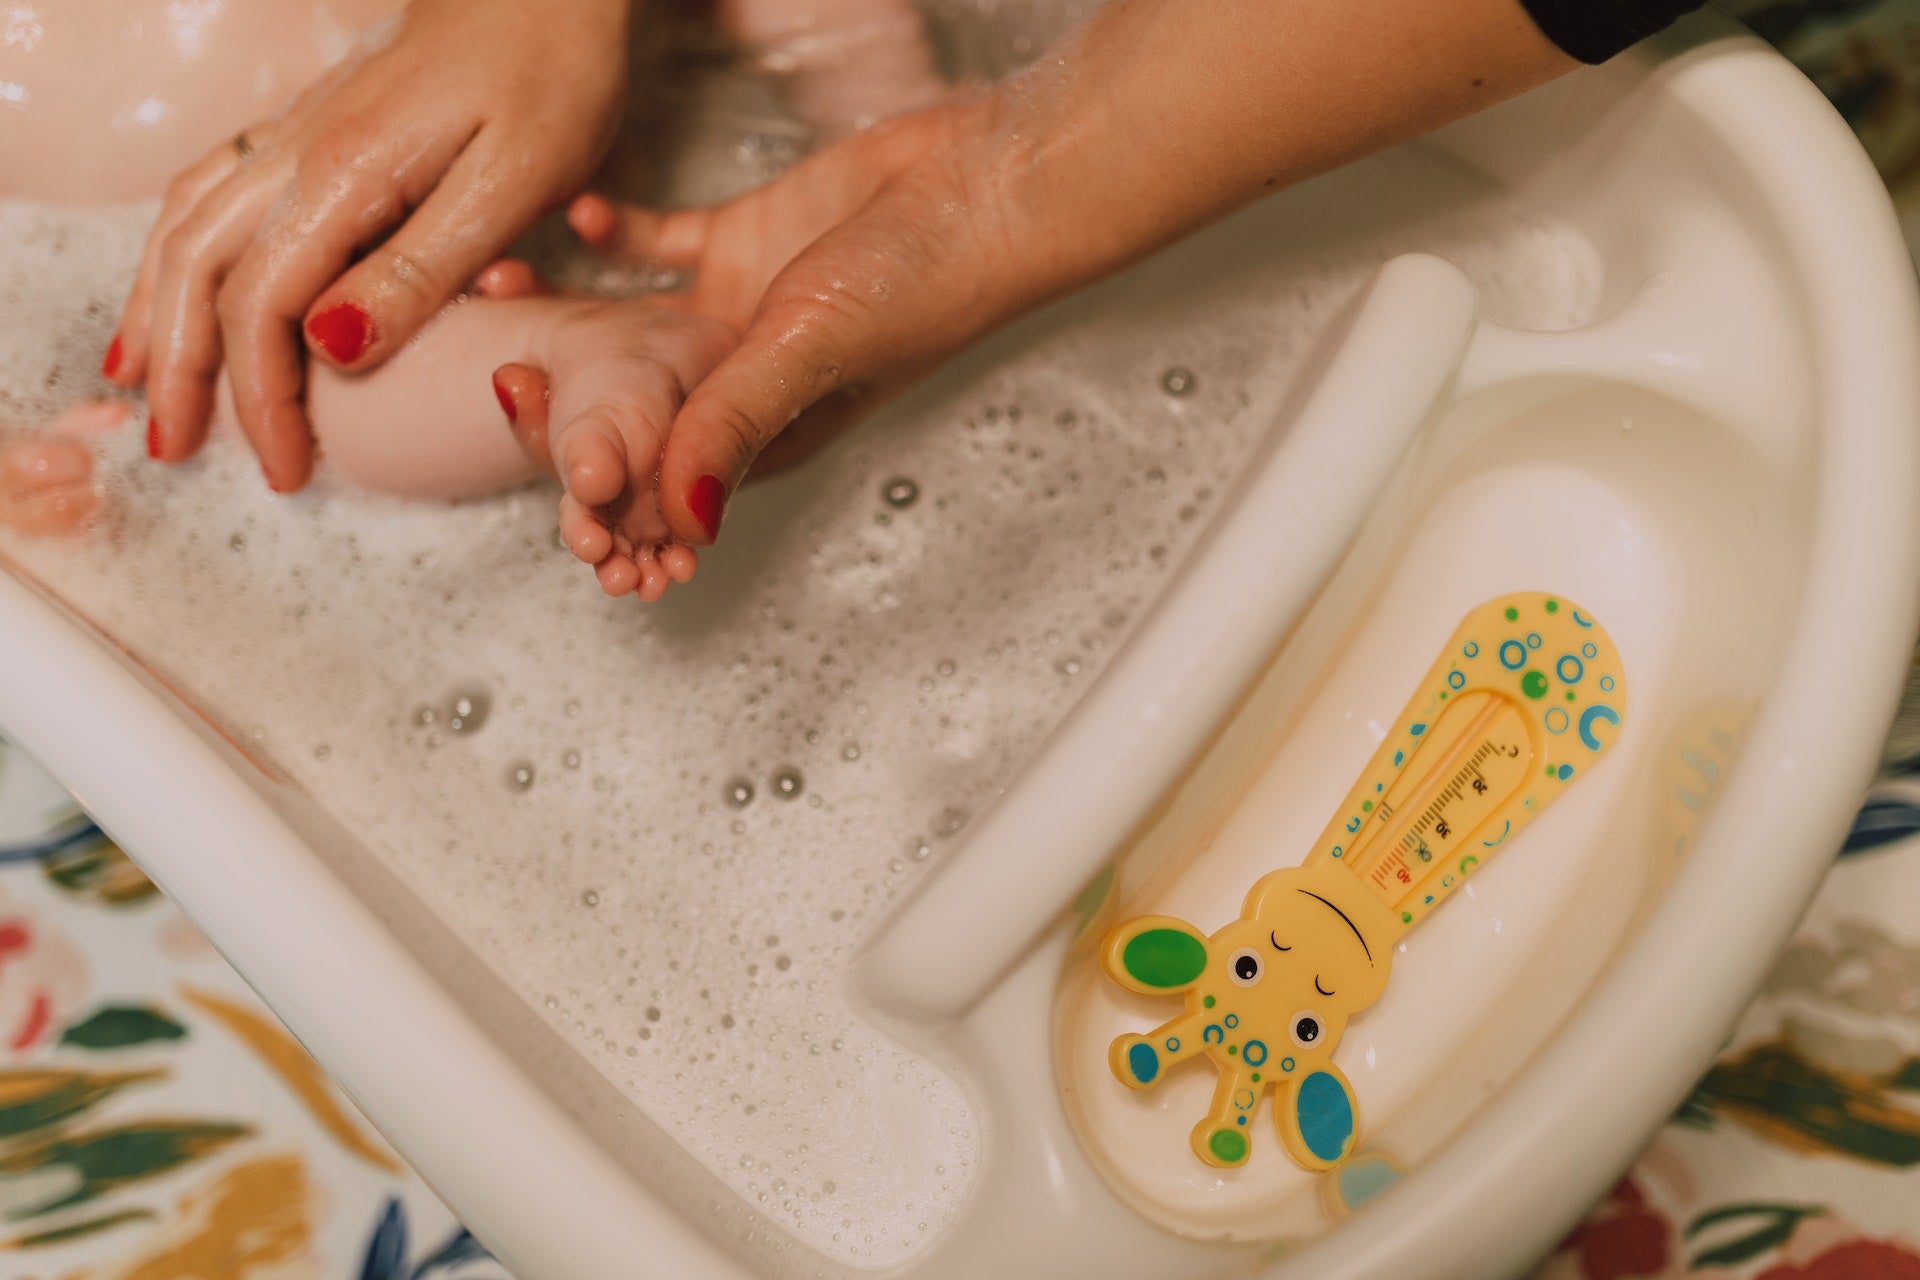 Baby feet getting bathed